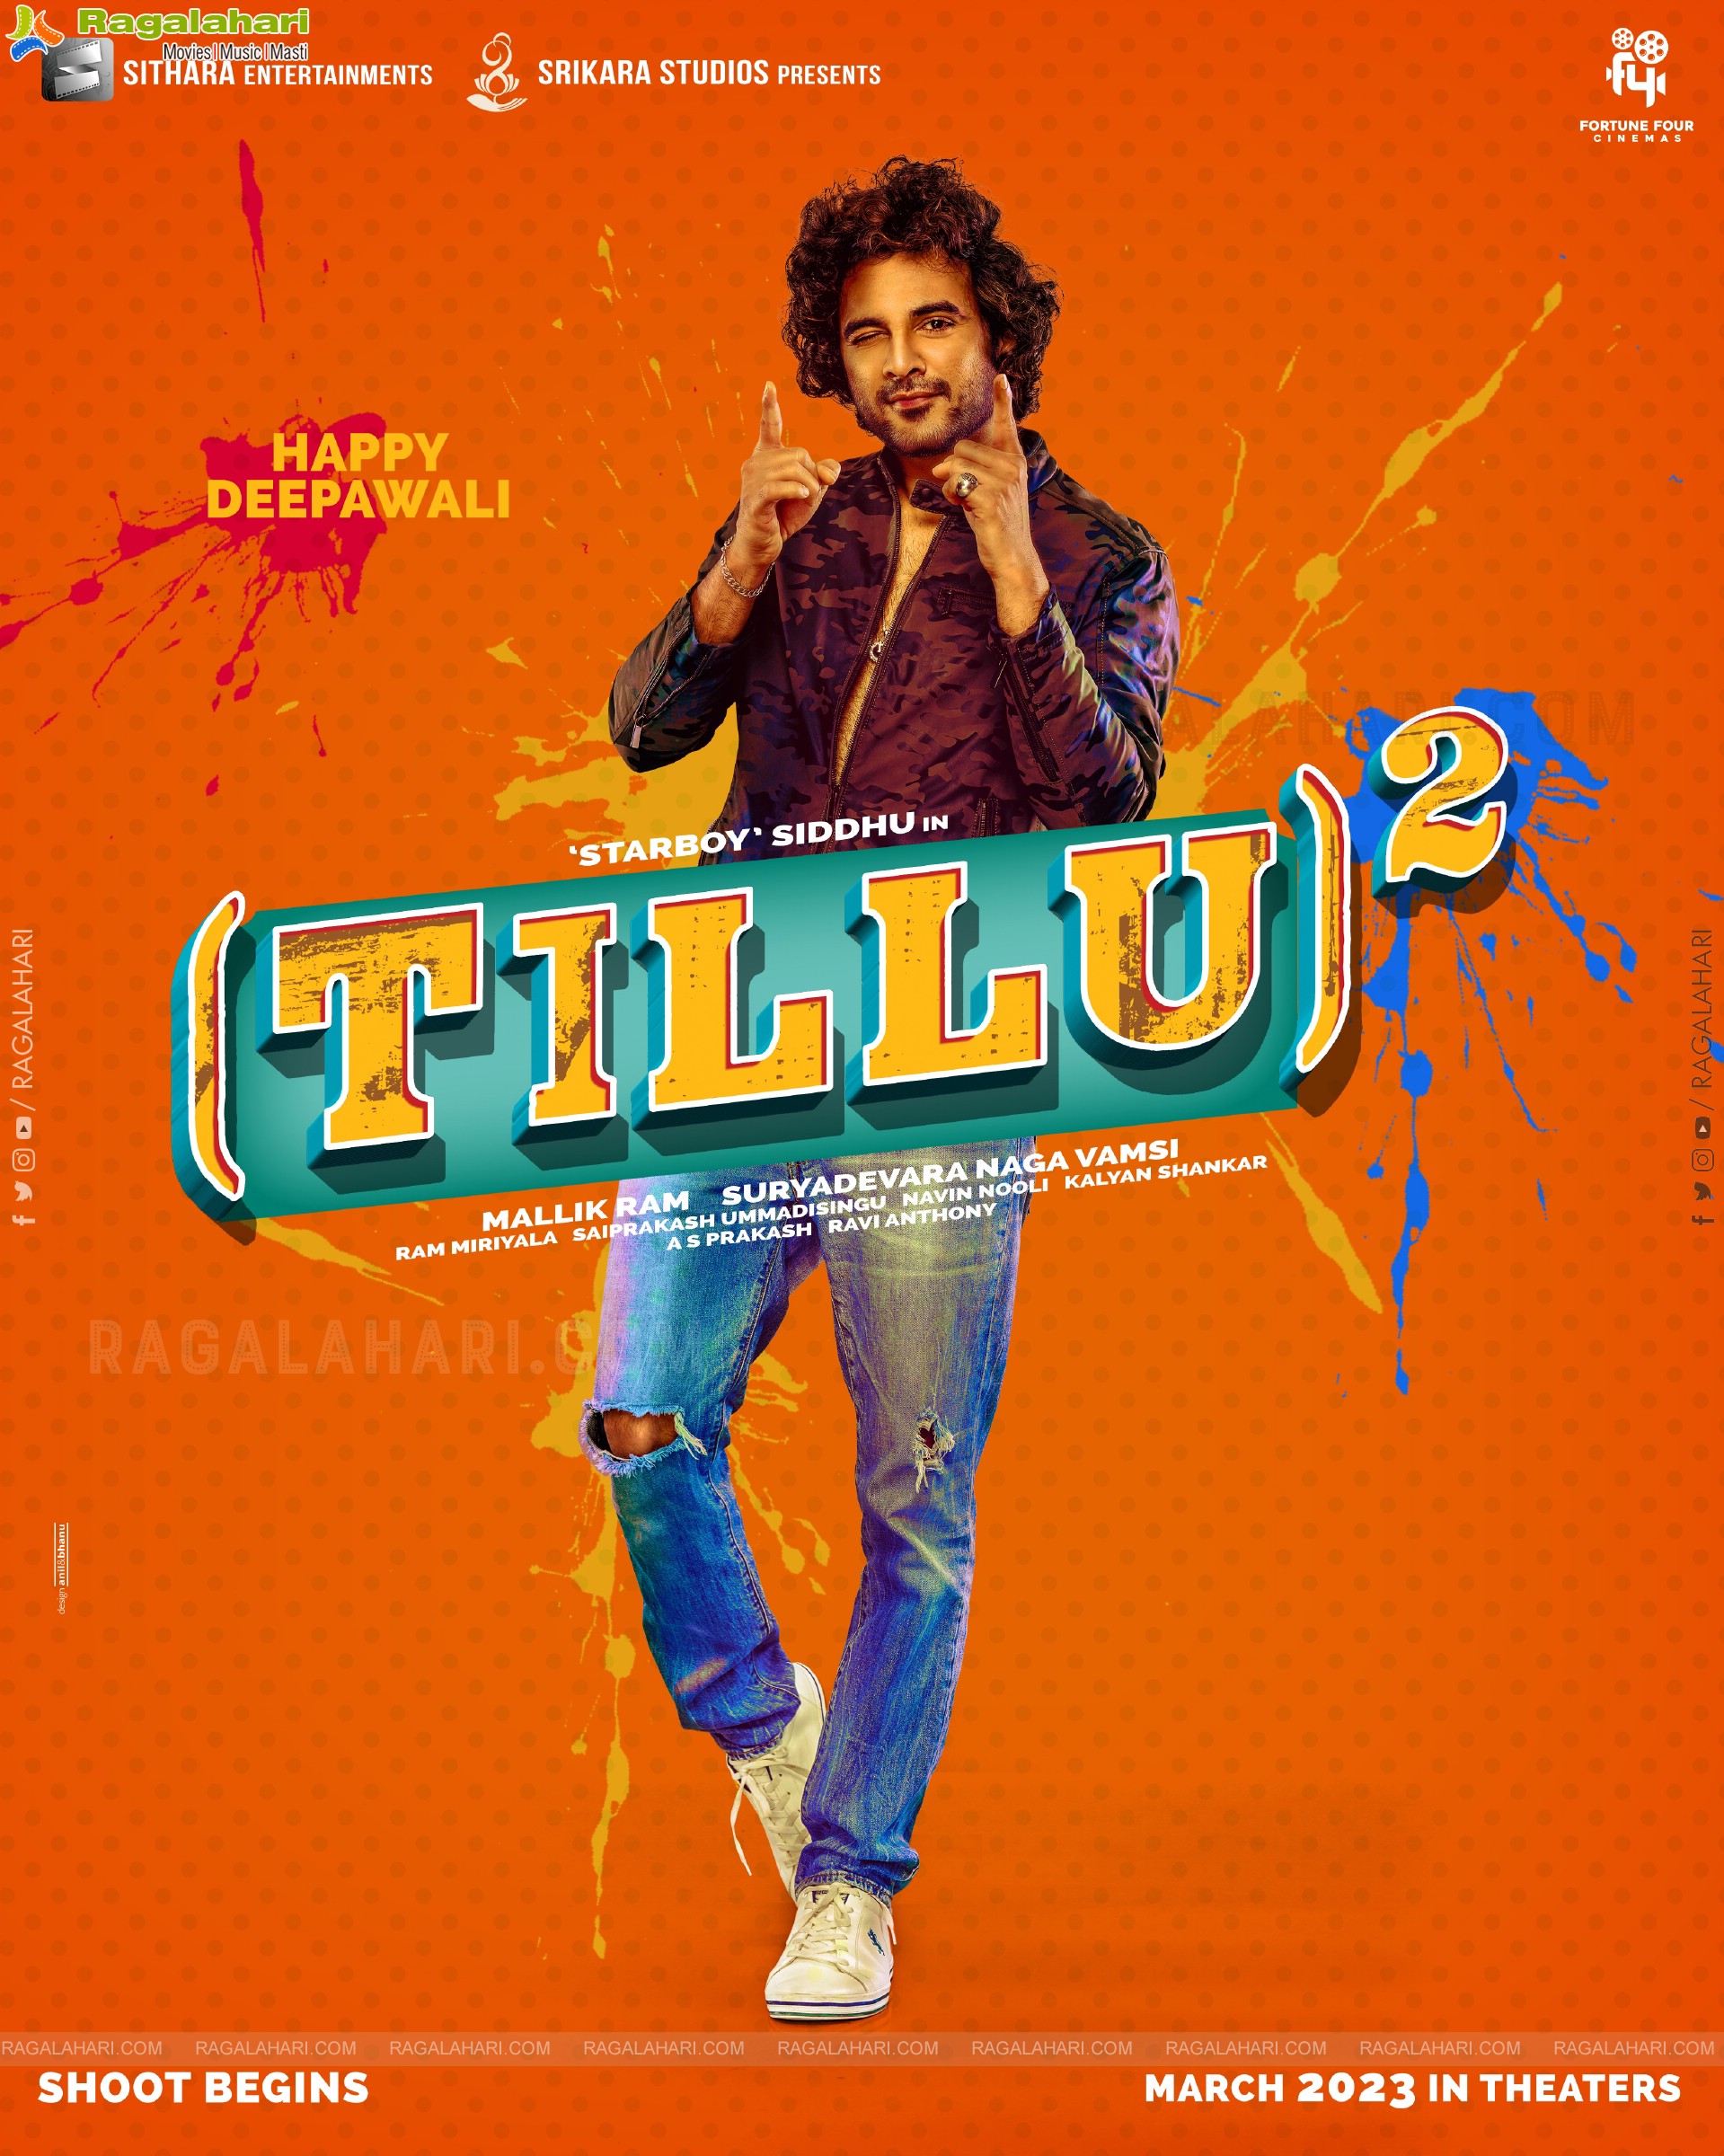 Tillu Square Movie Poster Designs
